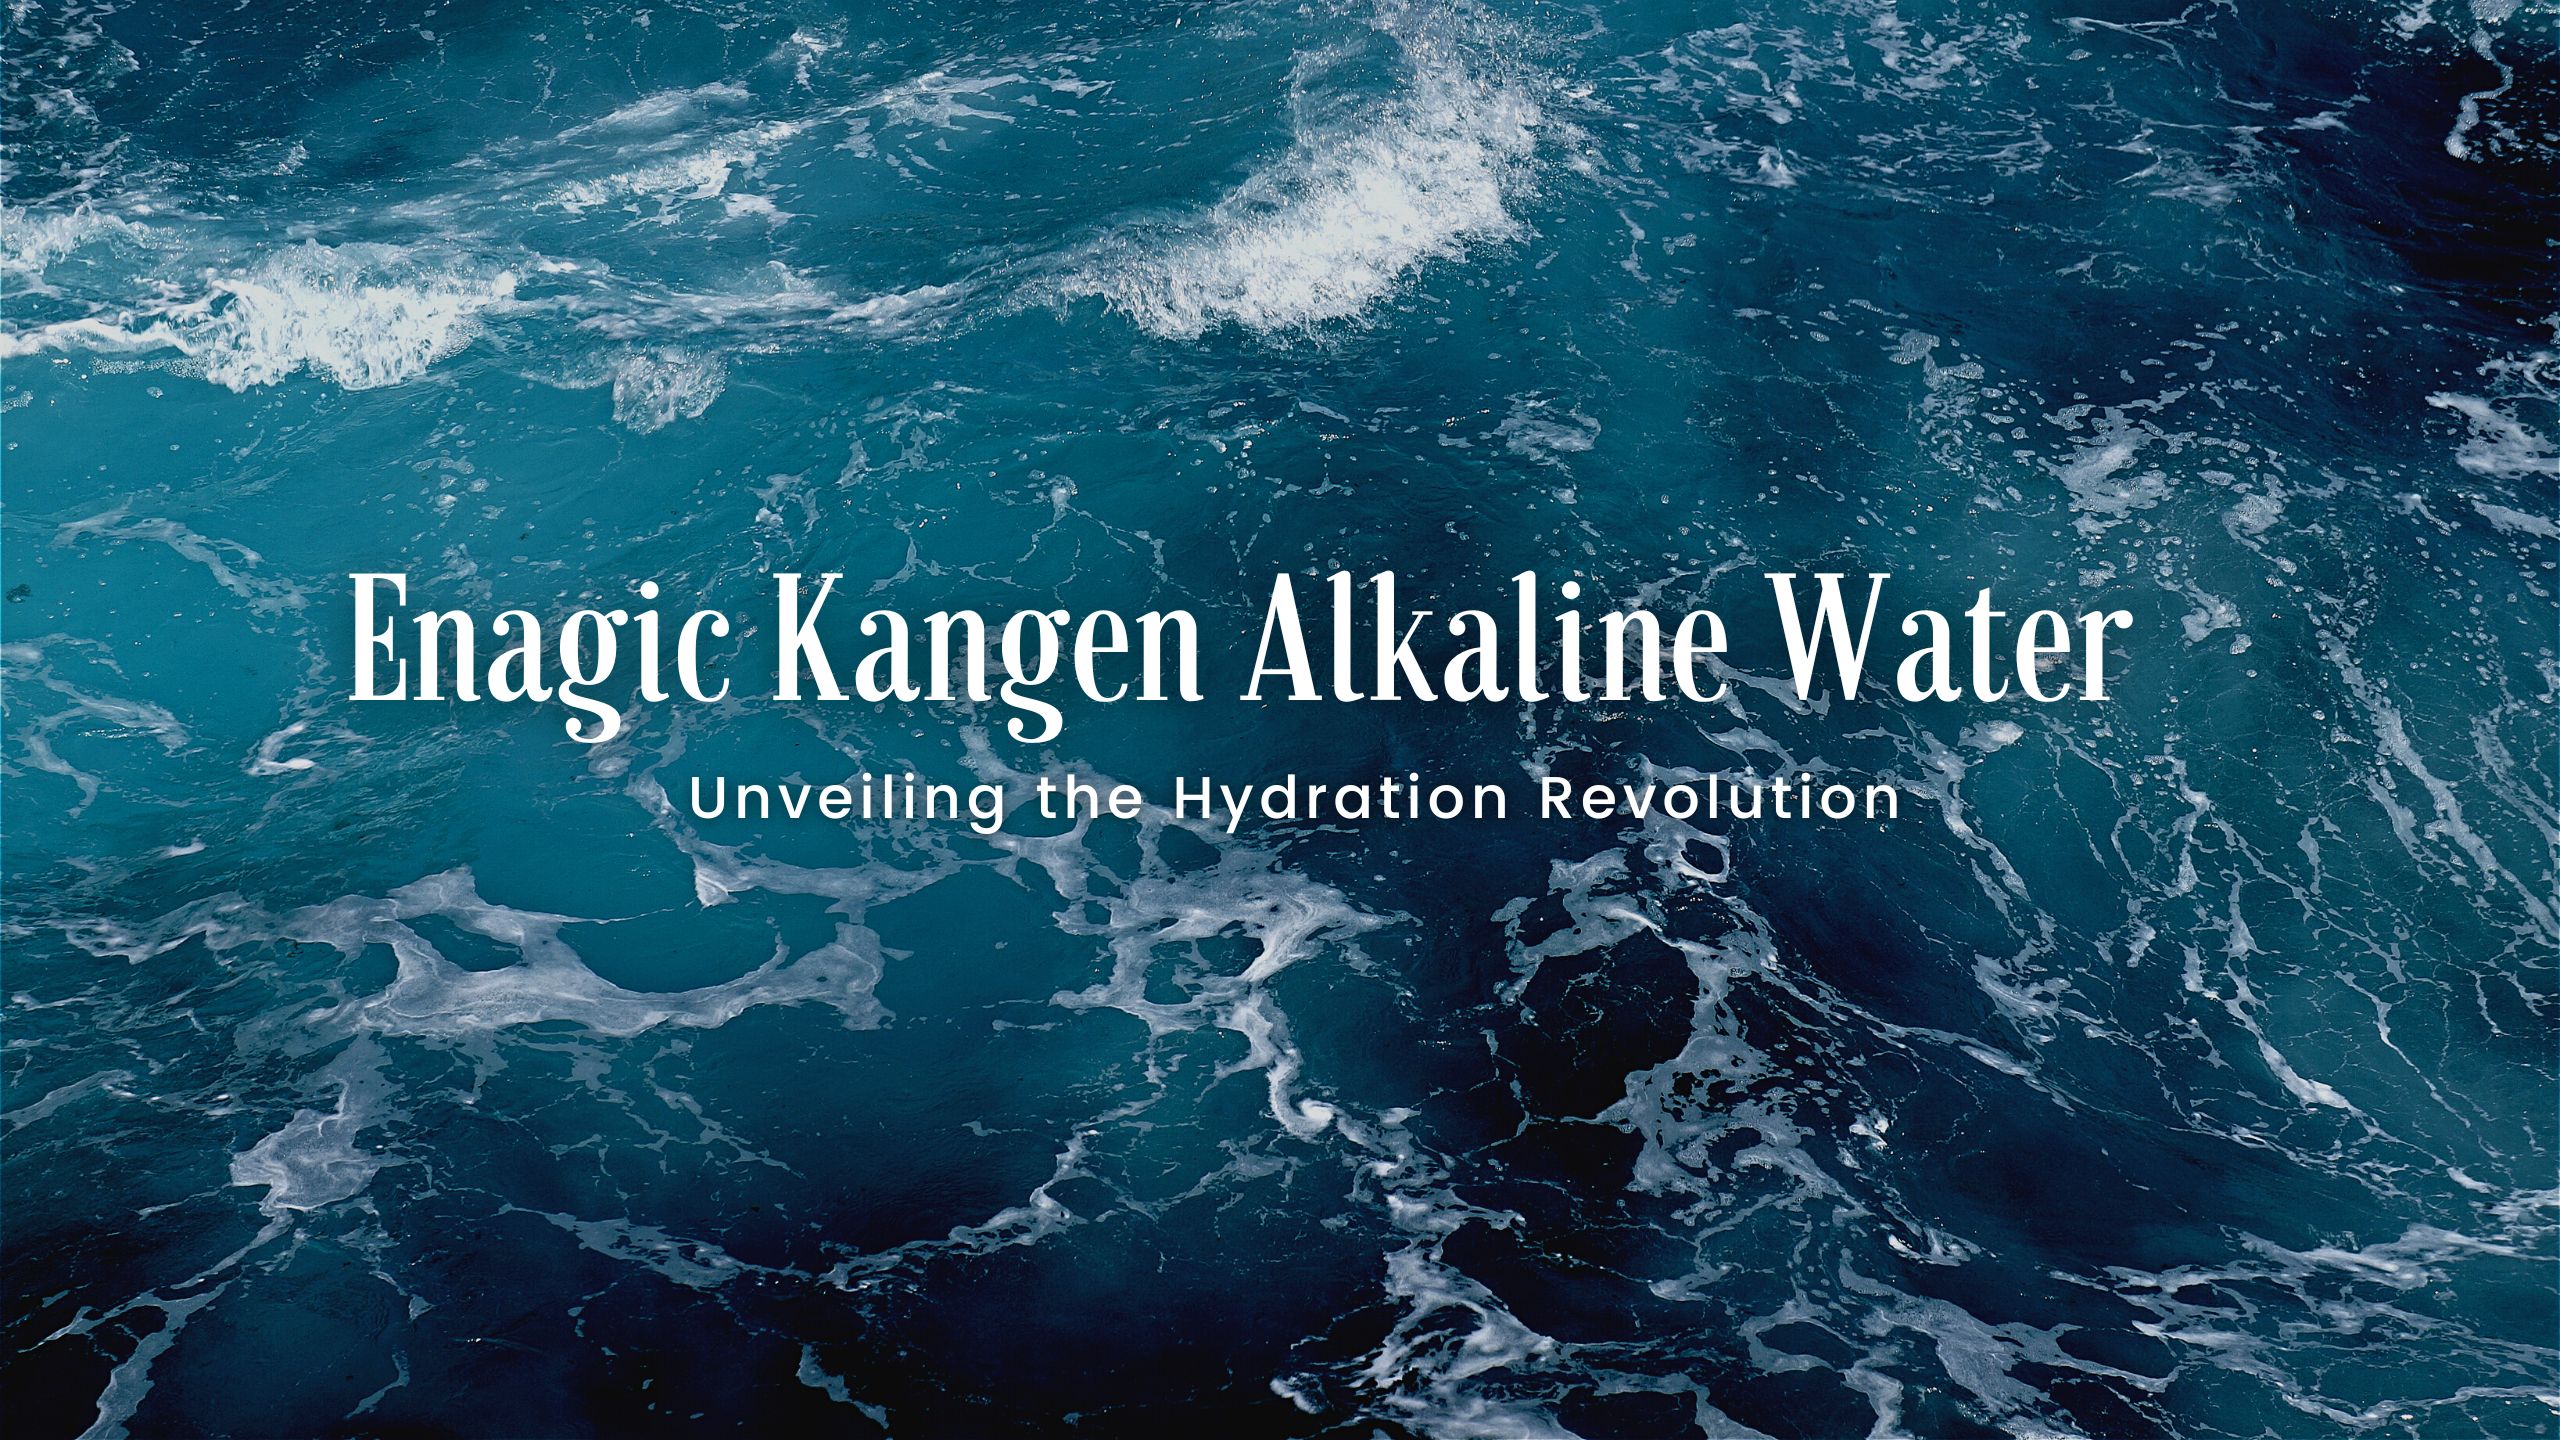 enagic kangen alkaline water